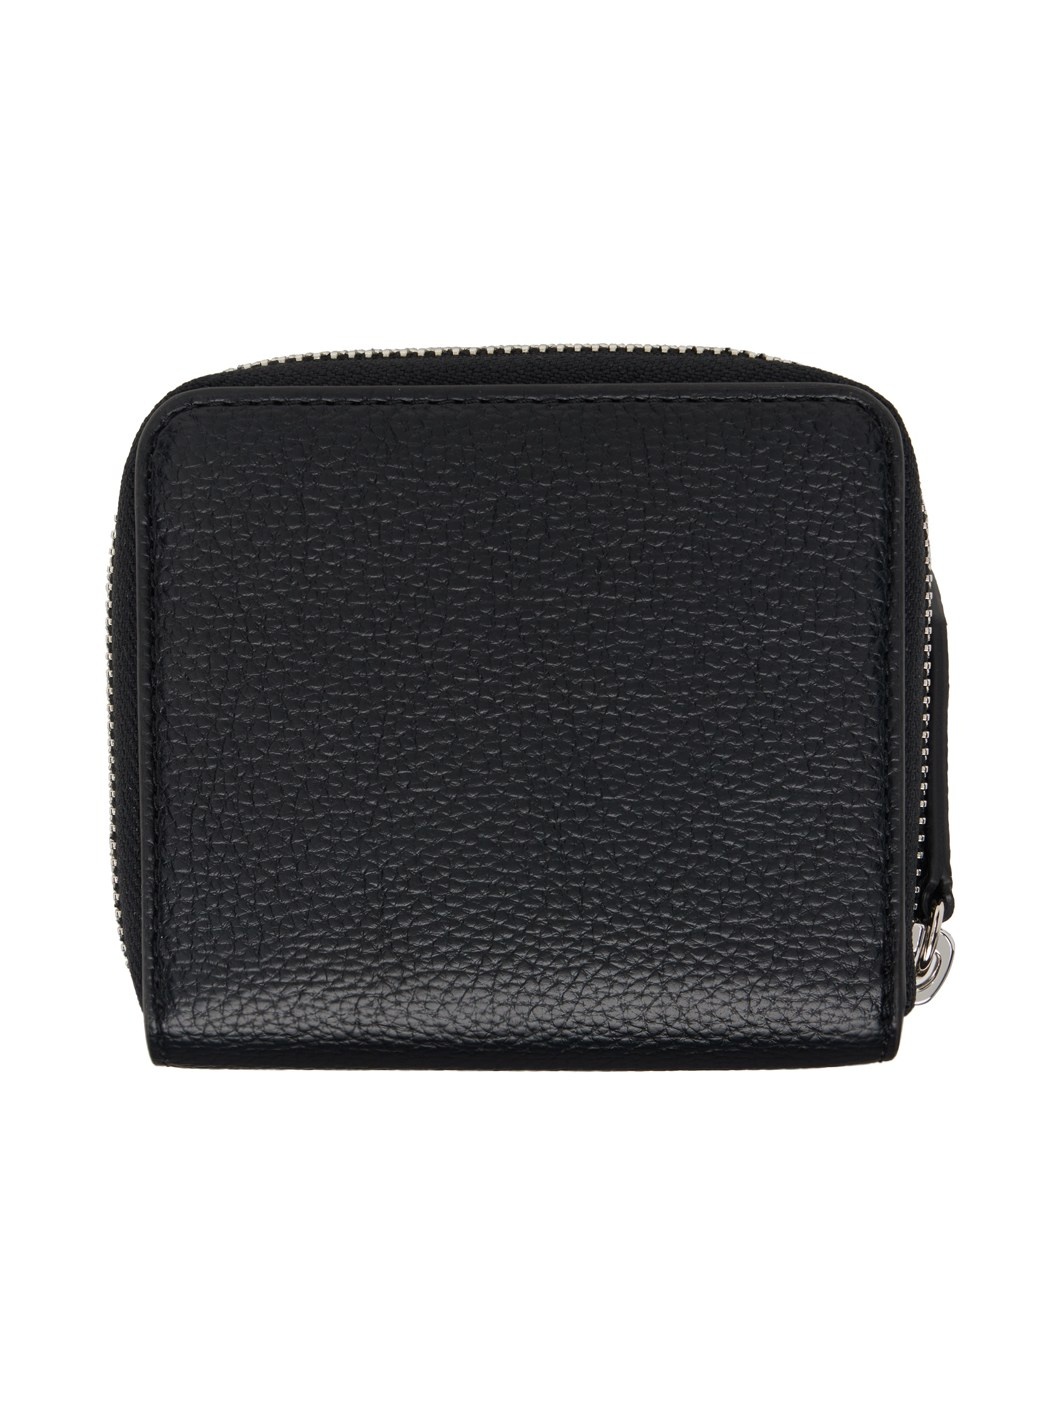 Black Medium Zip Wallet - 2